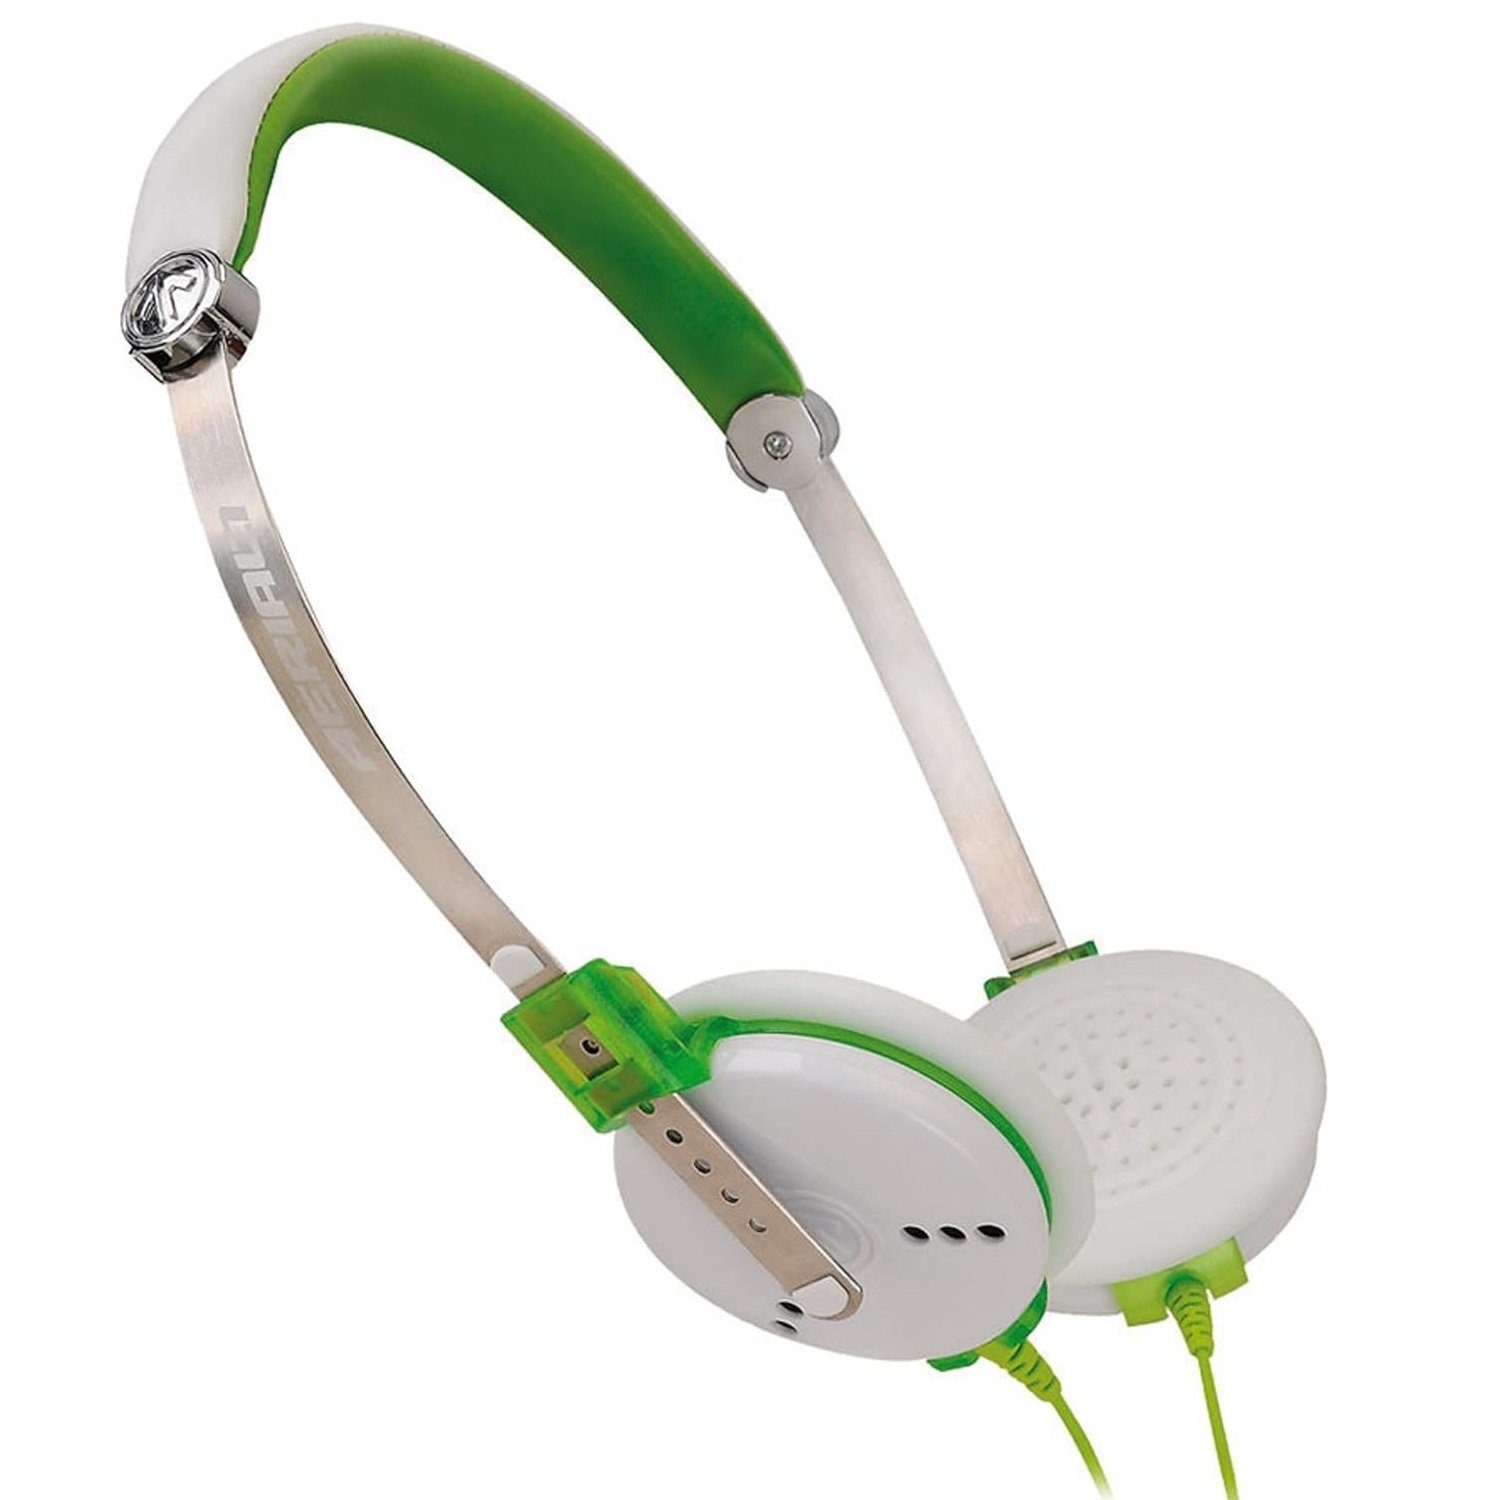 Headset Kabel Fuse Mikrofon Grün am + Kopfhörer Leicht) (Mikrofon, Mikrofon Aerial7 Sound-Disc Stereo, On-Ear Kompakt Headset